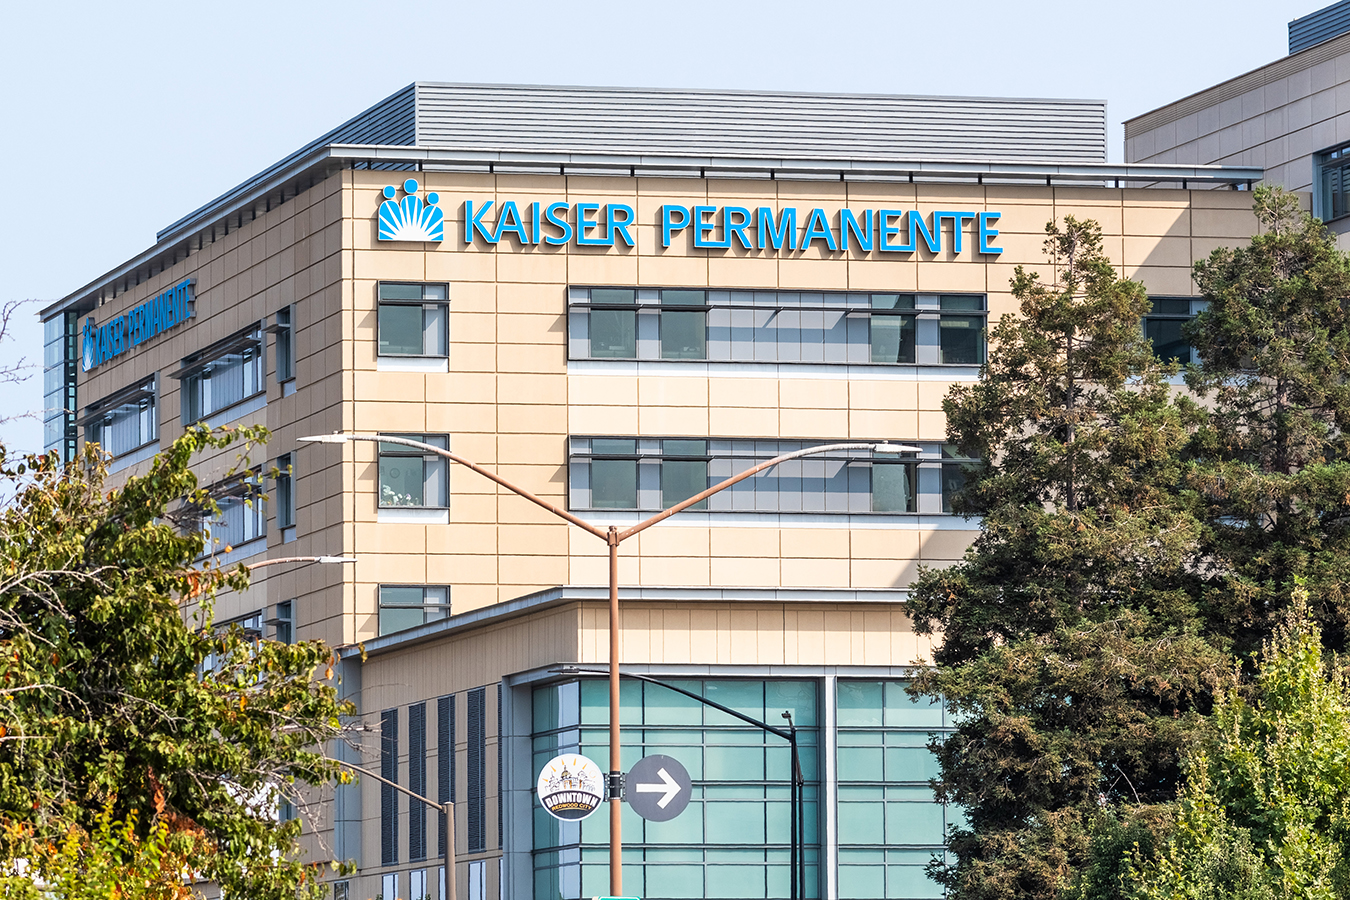 Kaiser permanente payment baxter arena parking